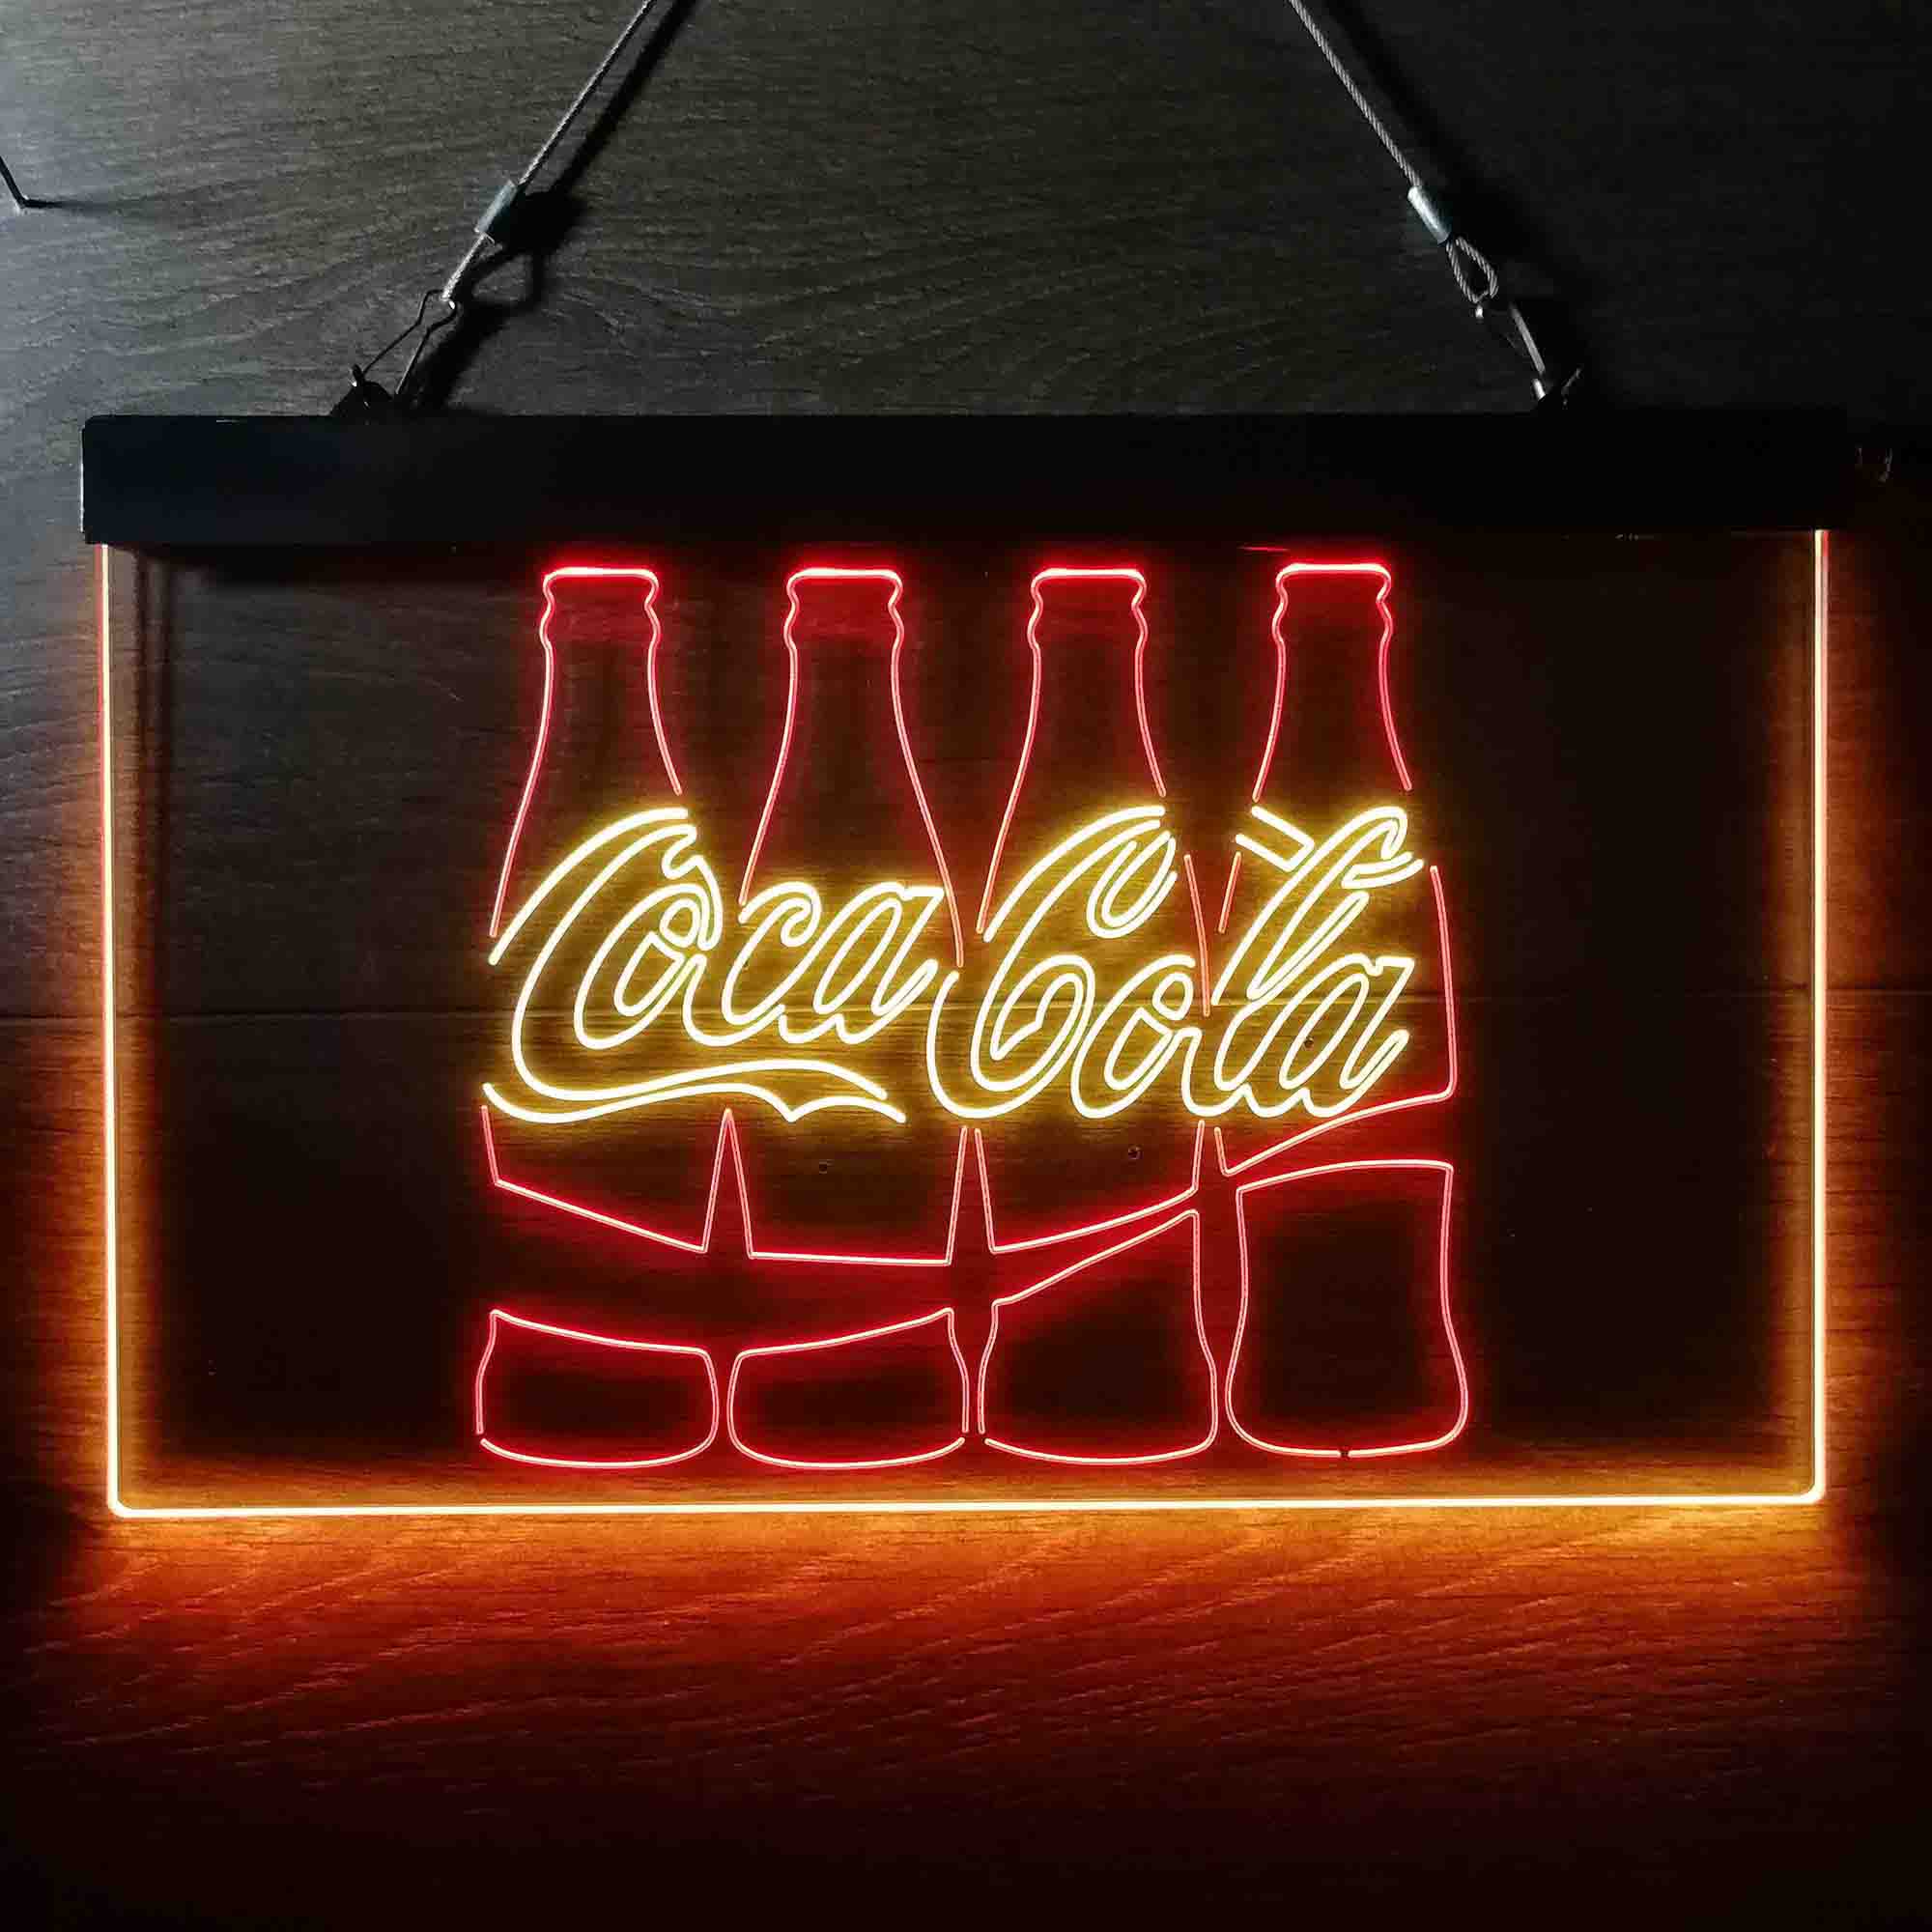 Coca Cola Bottles Neon-Like LED Sign